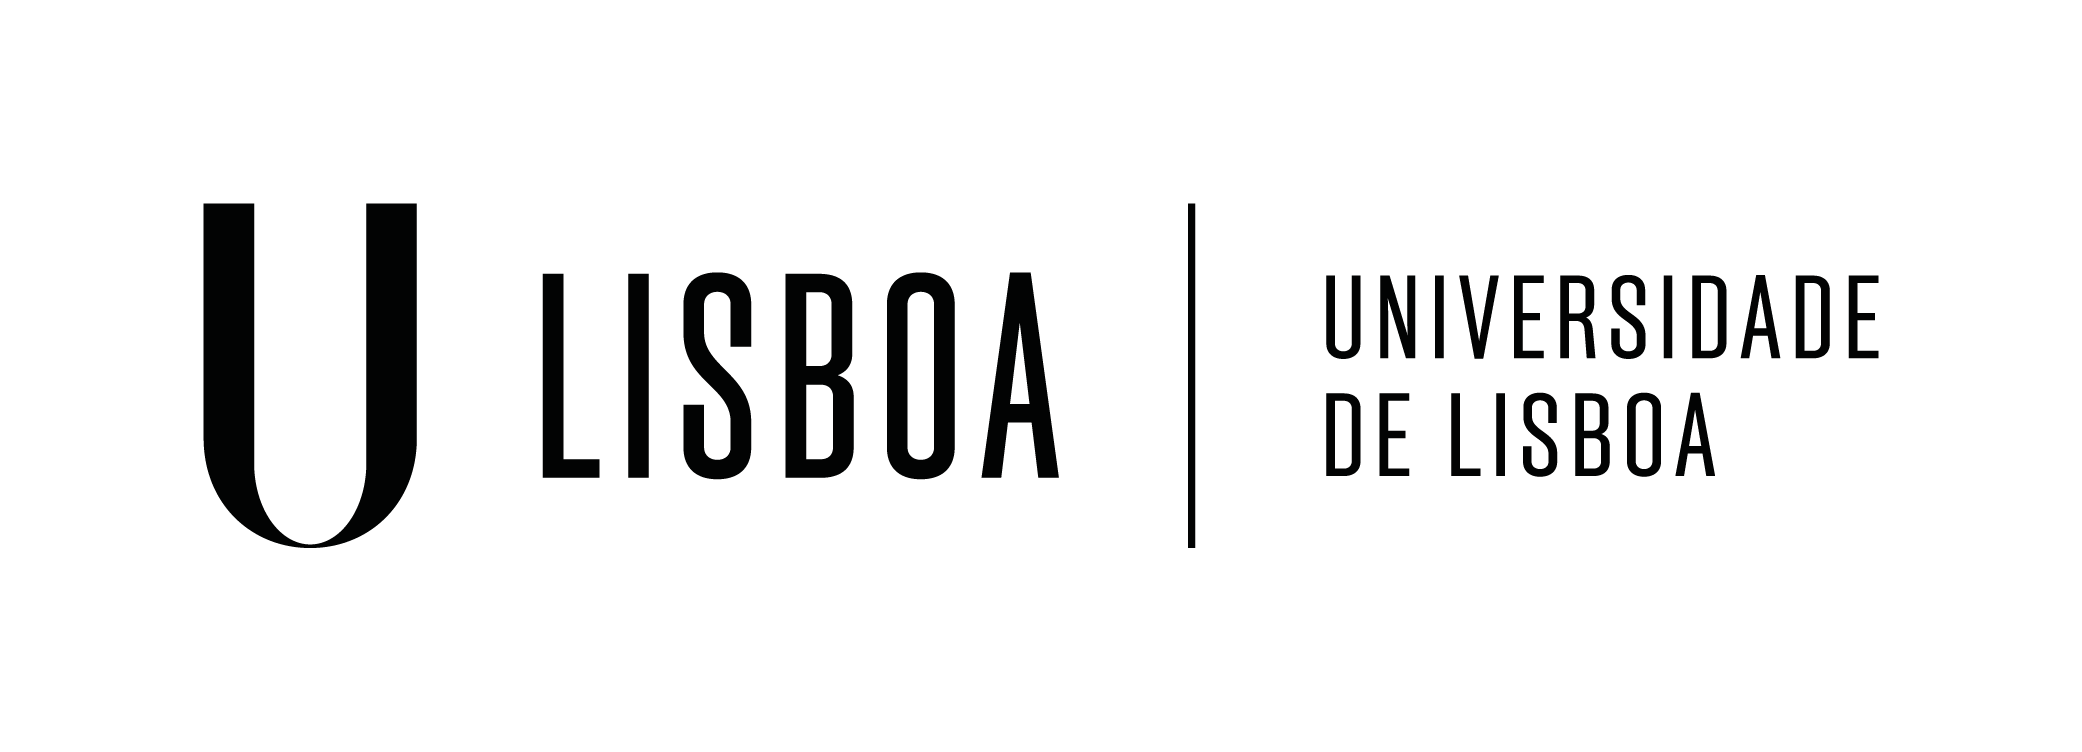 university of lisbon logo